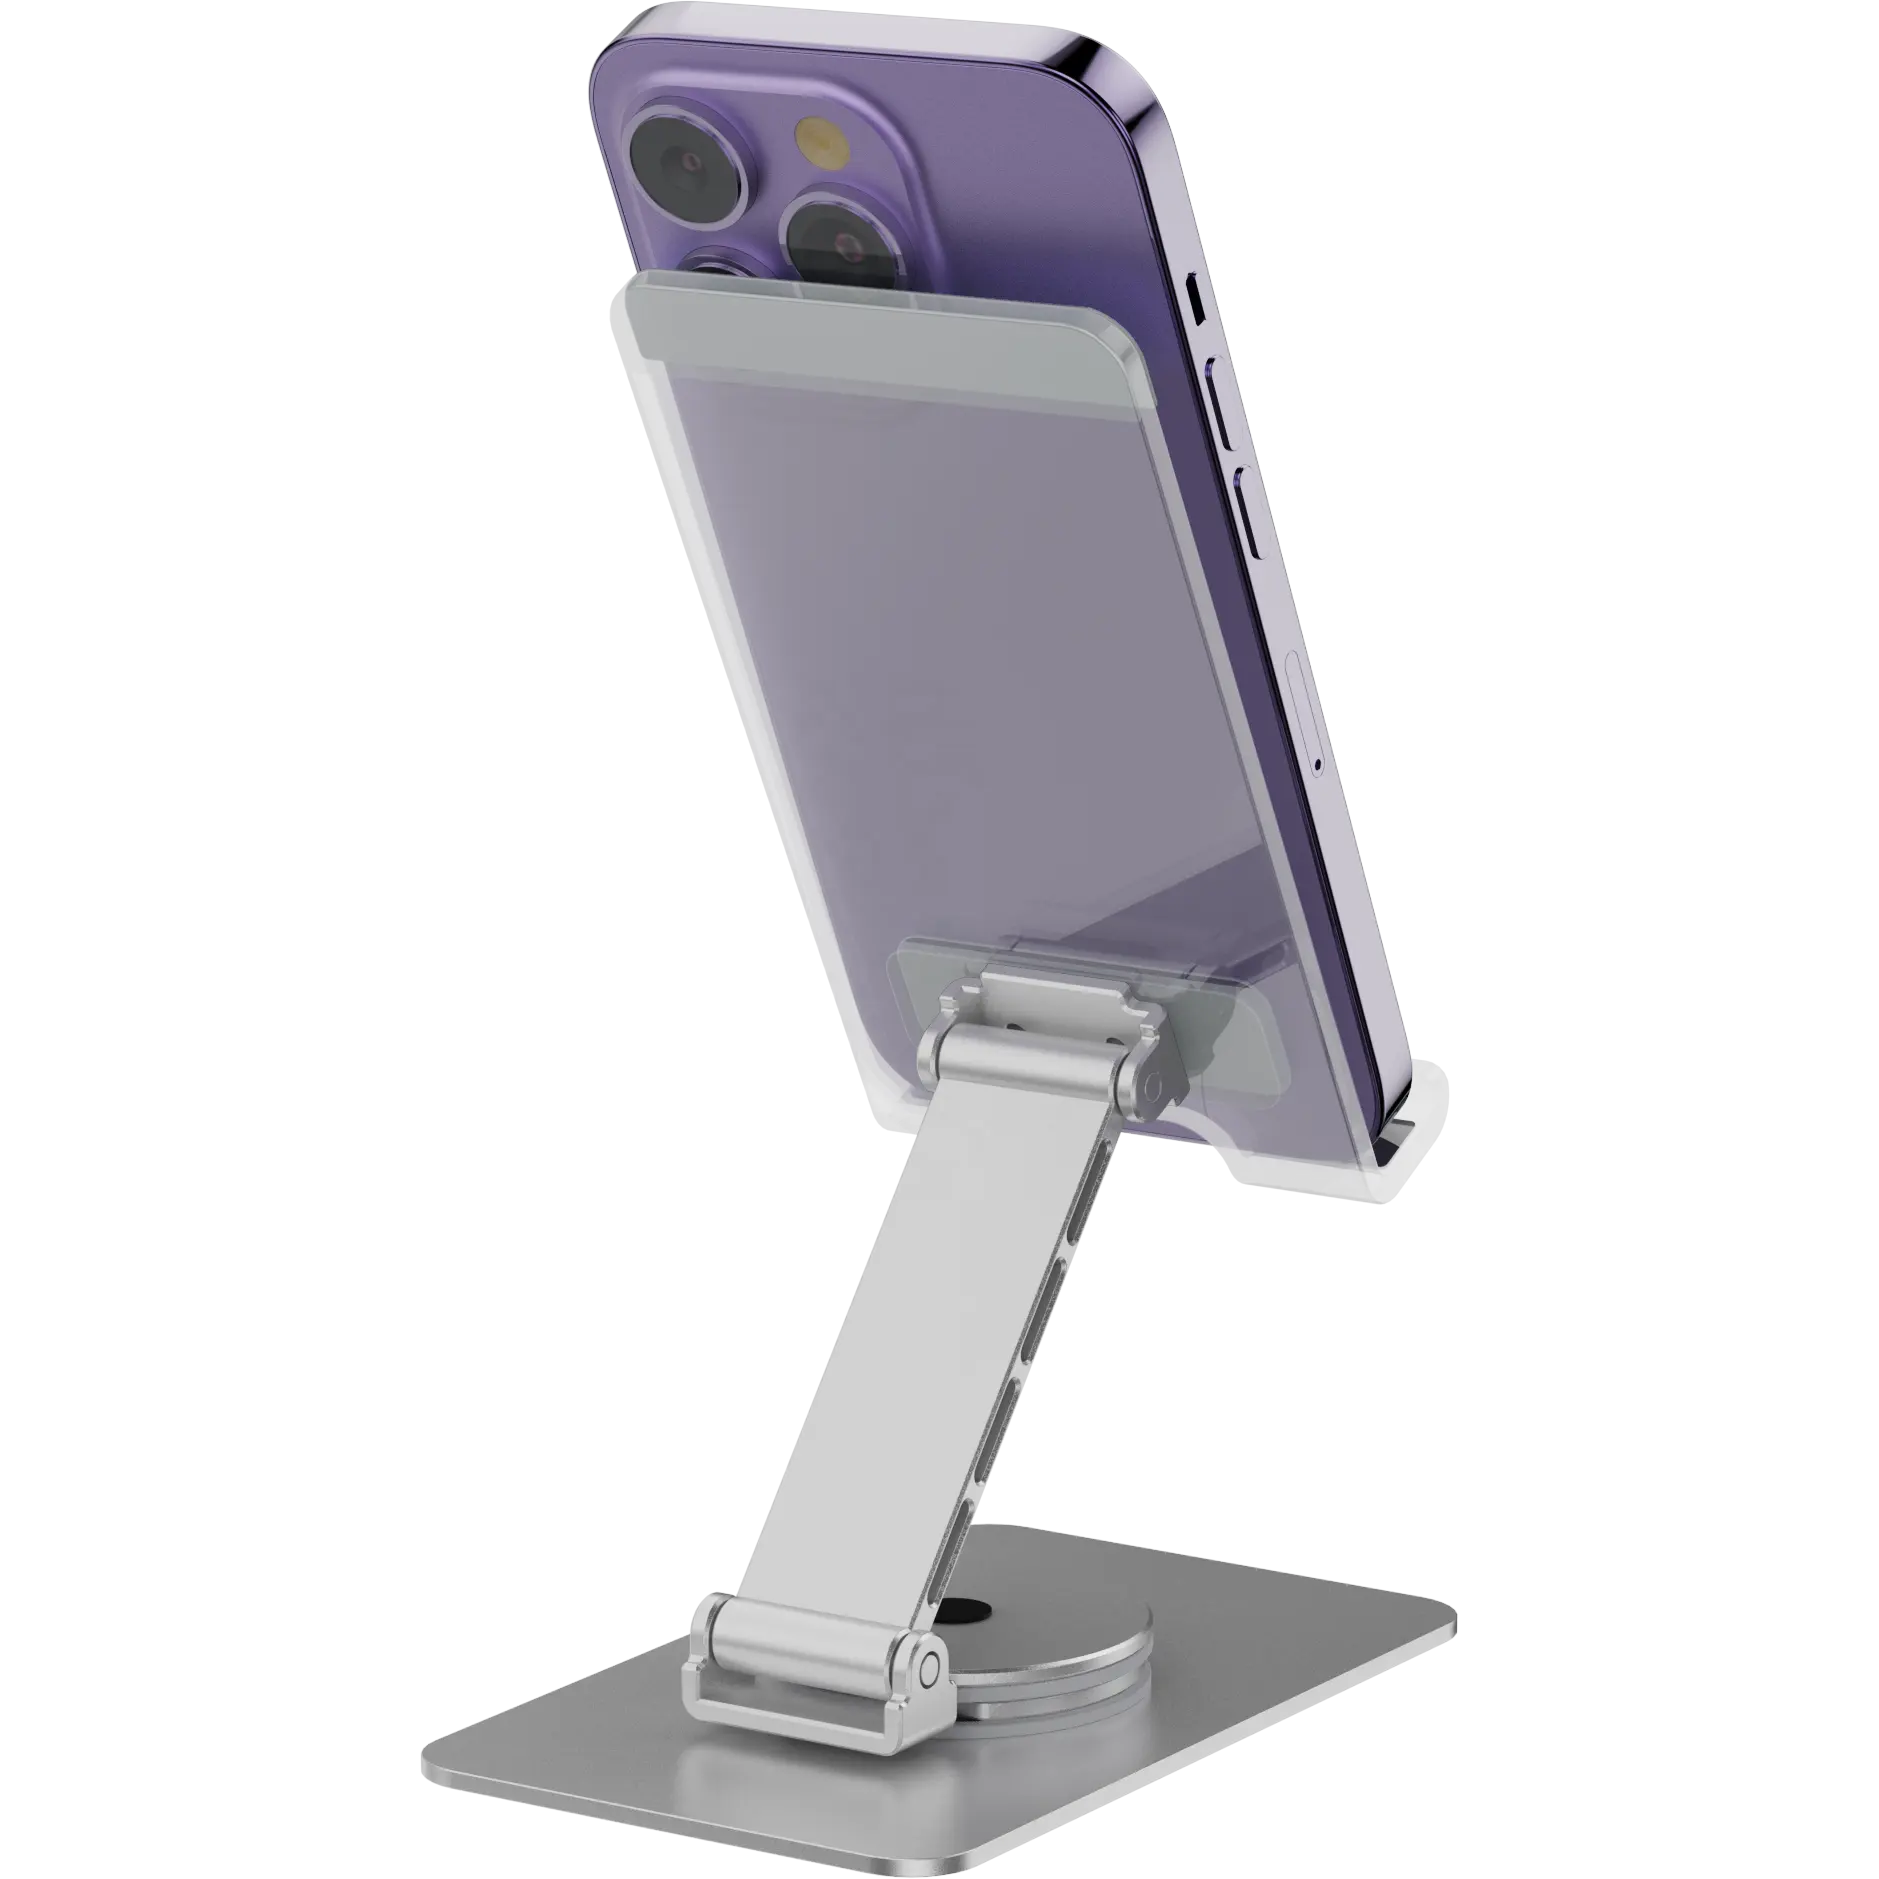 OEM Aluminum alloy acrylic mobile phone holder 360 rotating base angle phone stand adjustable foldable phone desktop stand